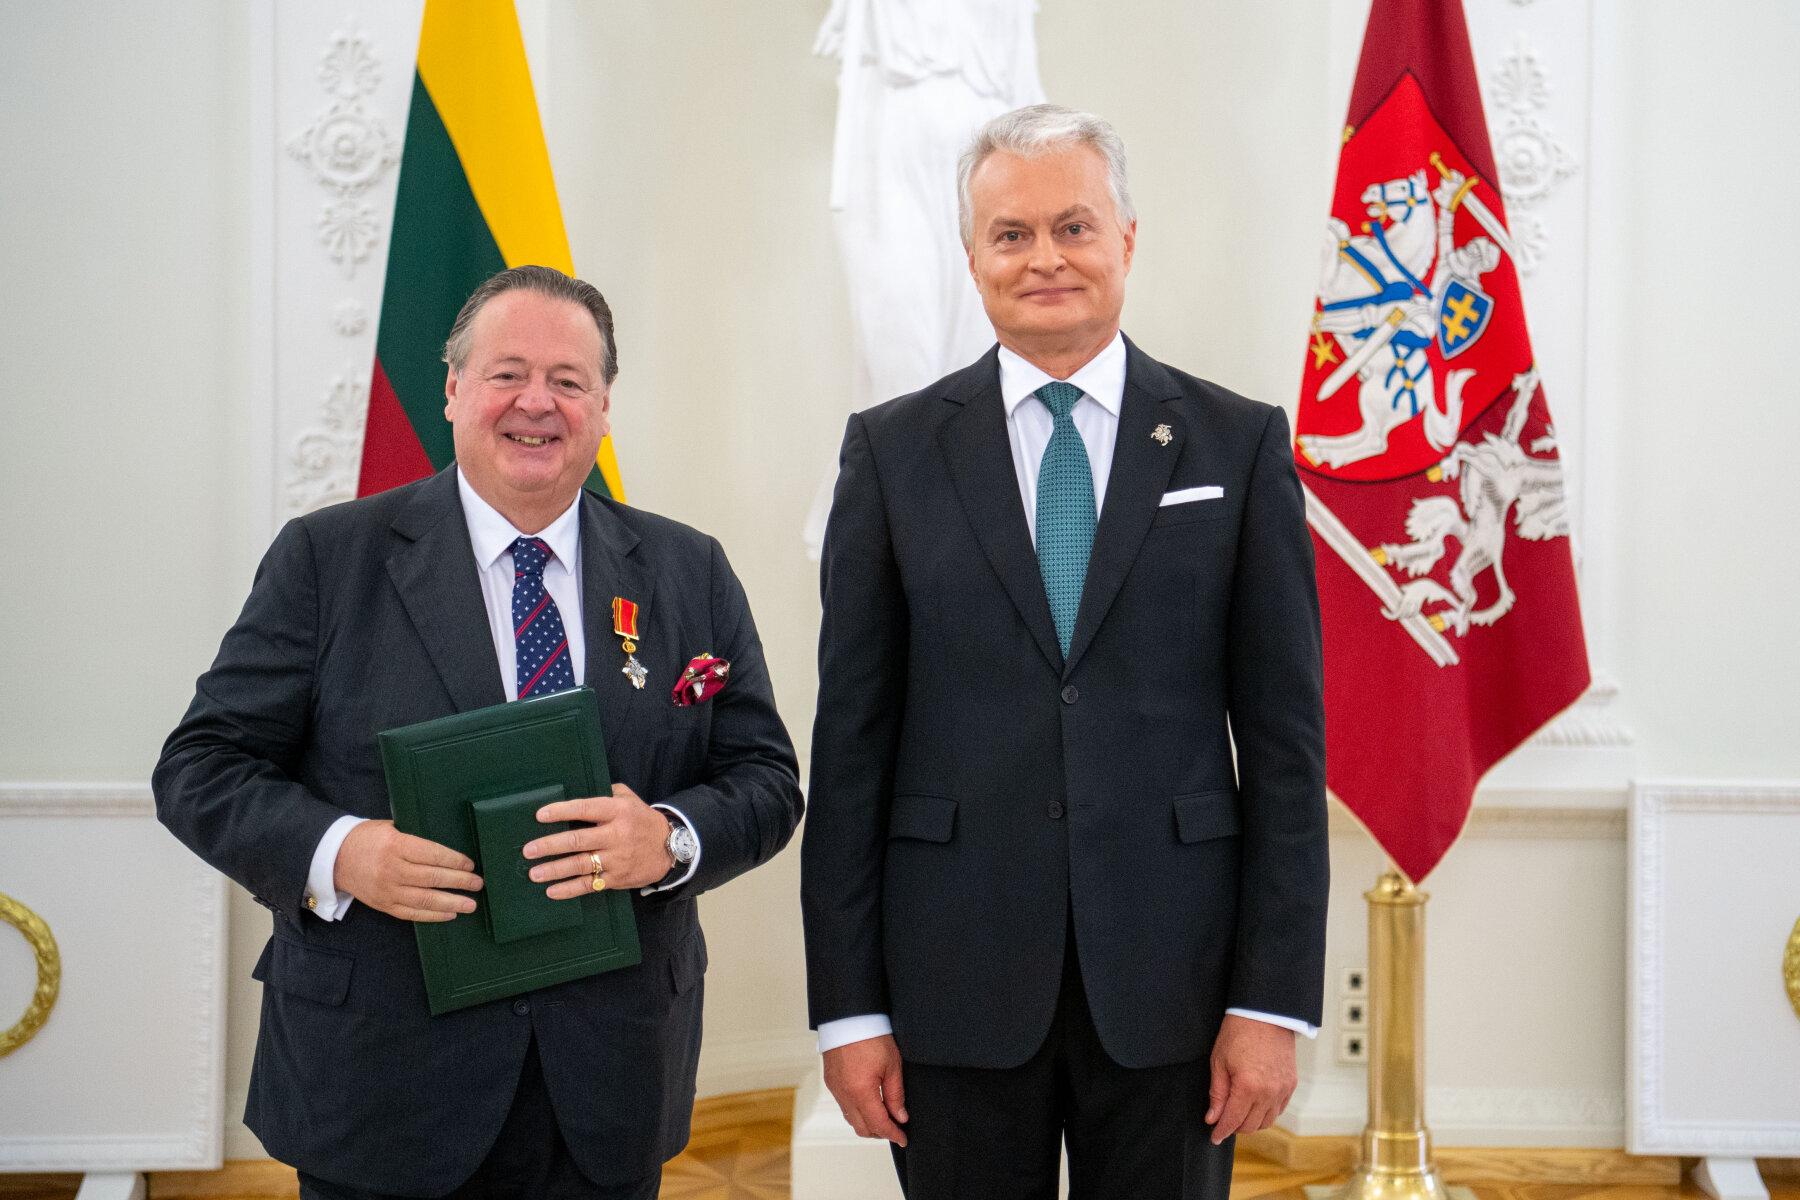 Ambassador of the Order of Malta Receives Prestigious Award for Philanthropic Activities in Lithuania